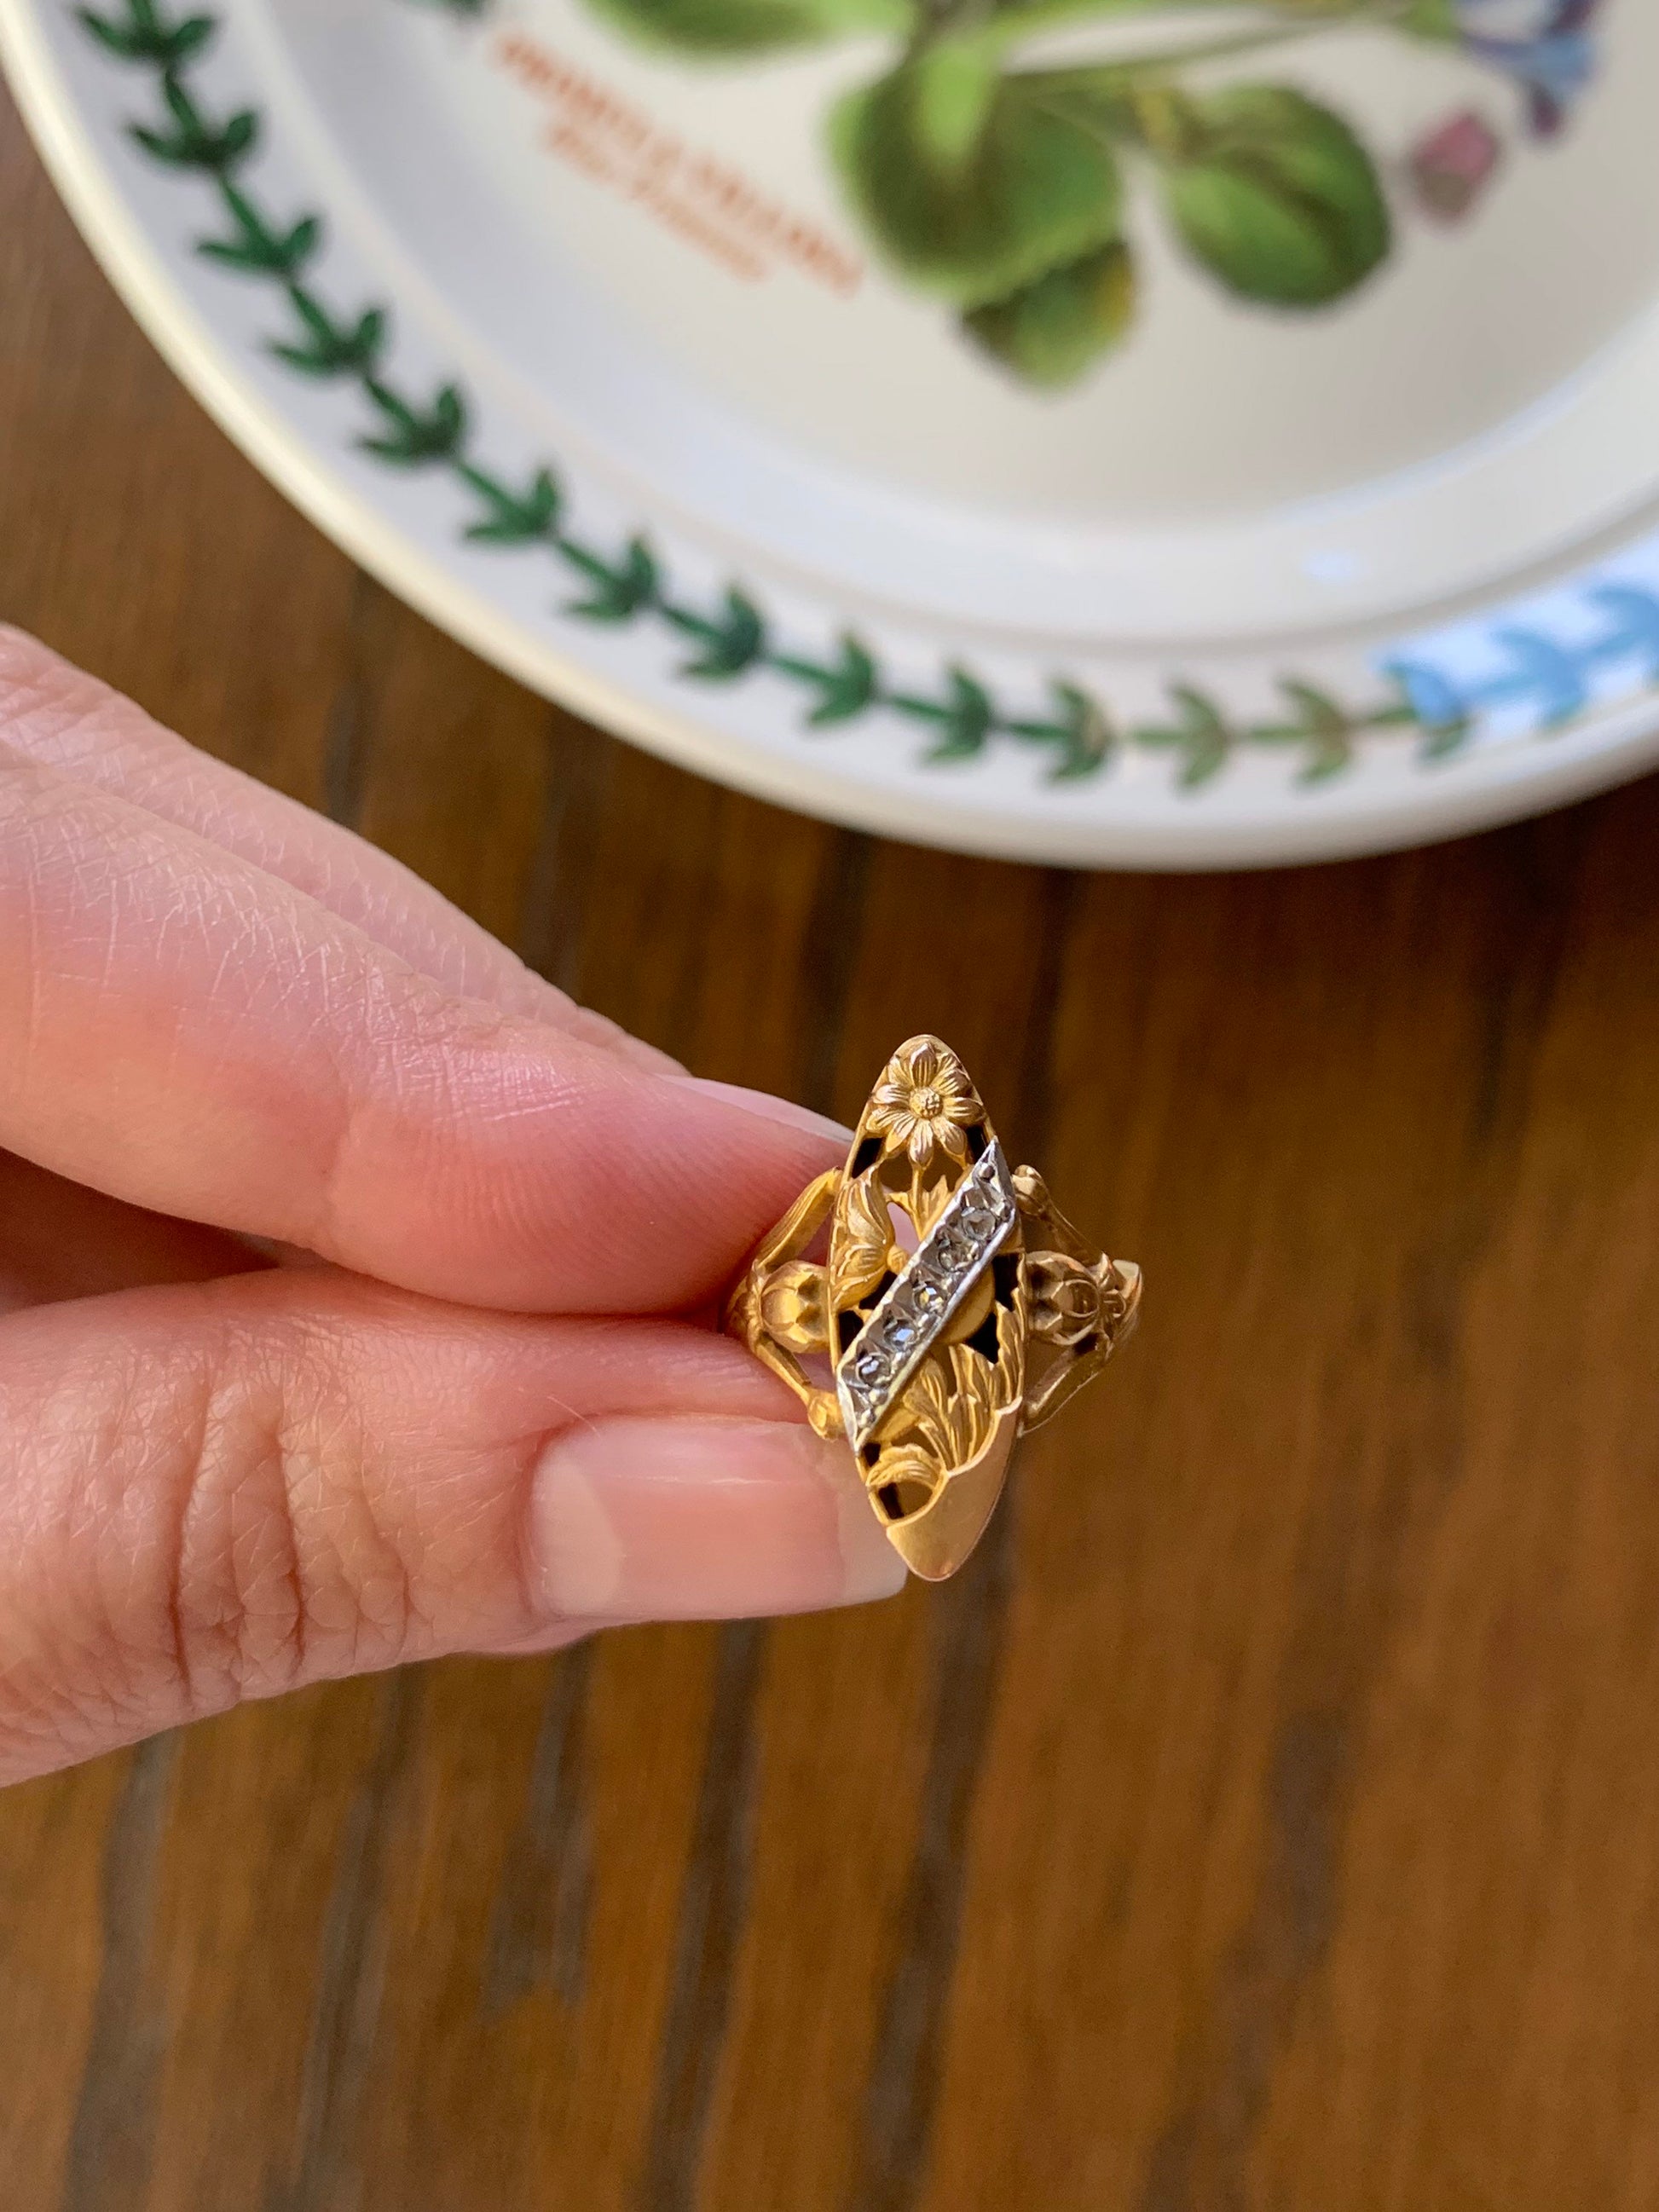 FRENCH Antique FLORAL Garden Navette Ring 18k Gold Art Nouveau Victorian Rose Cut DIAMONDs Heart Bezel Belle Epoque Romantic Gift Stacker